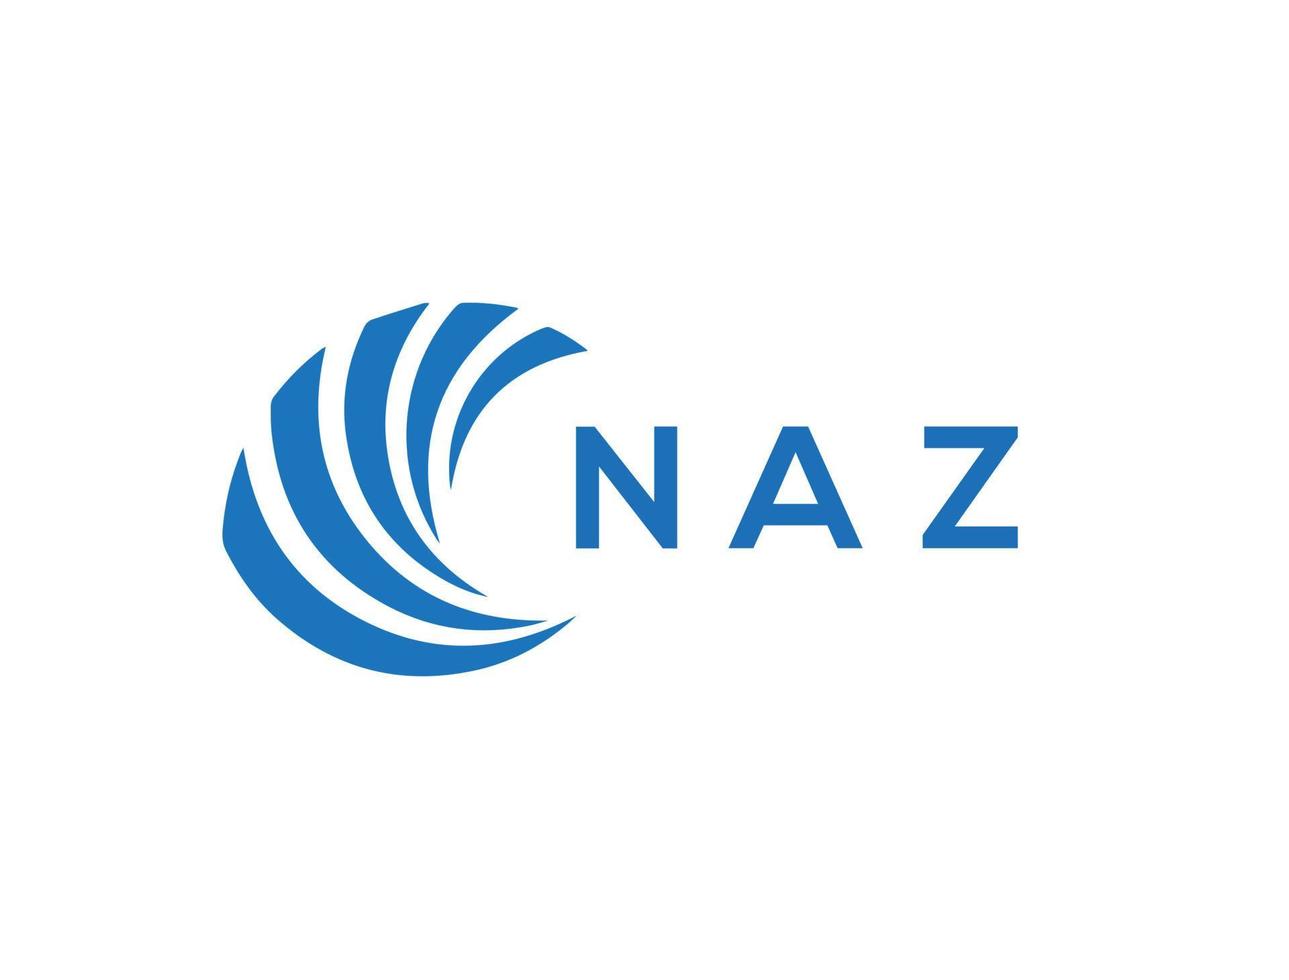 naz lettera logo design su bianca sfondo. naz creativo cerchio lettera logo concetto. naz lettera design. vettore